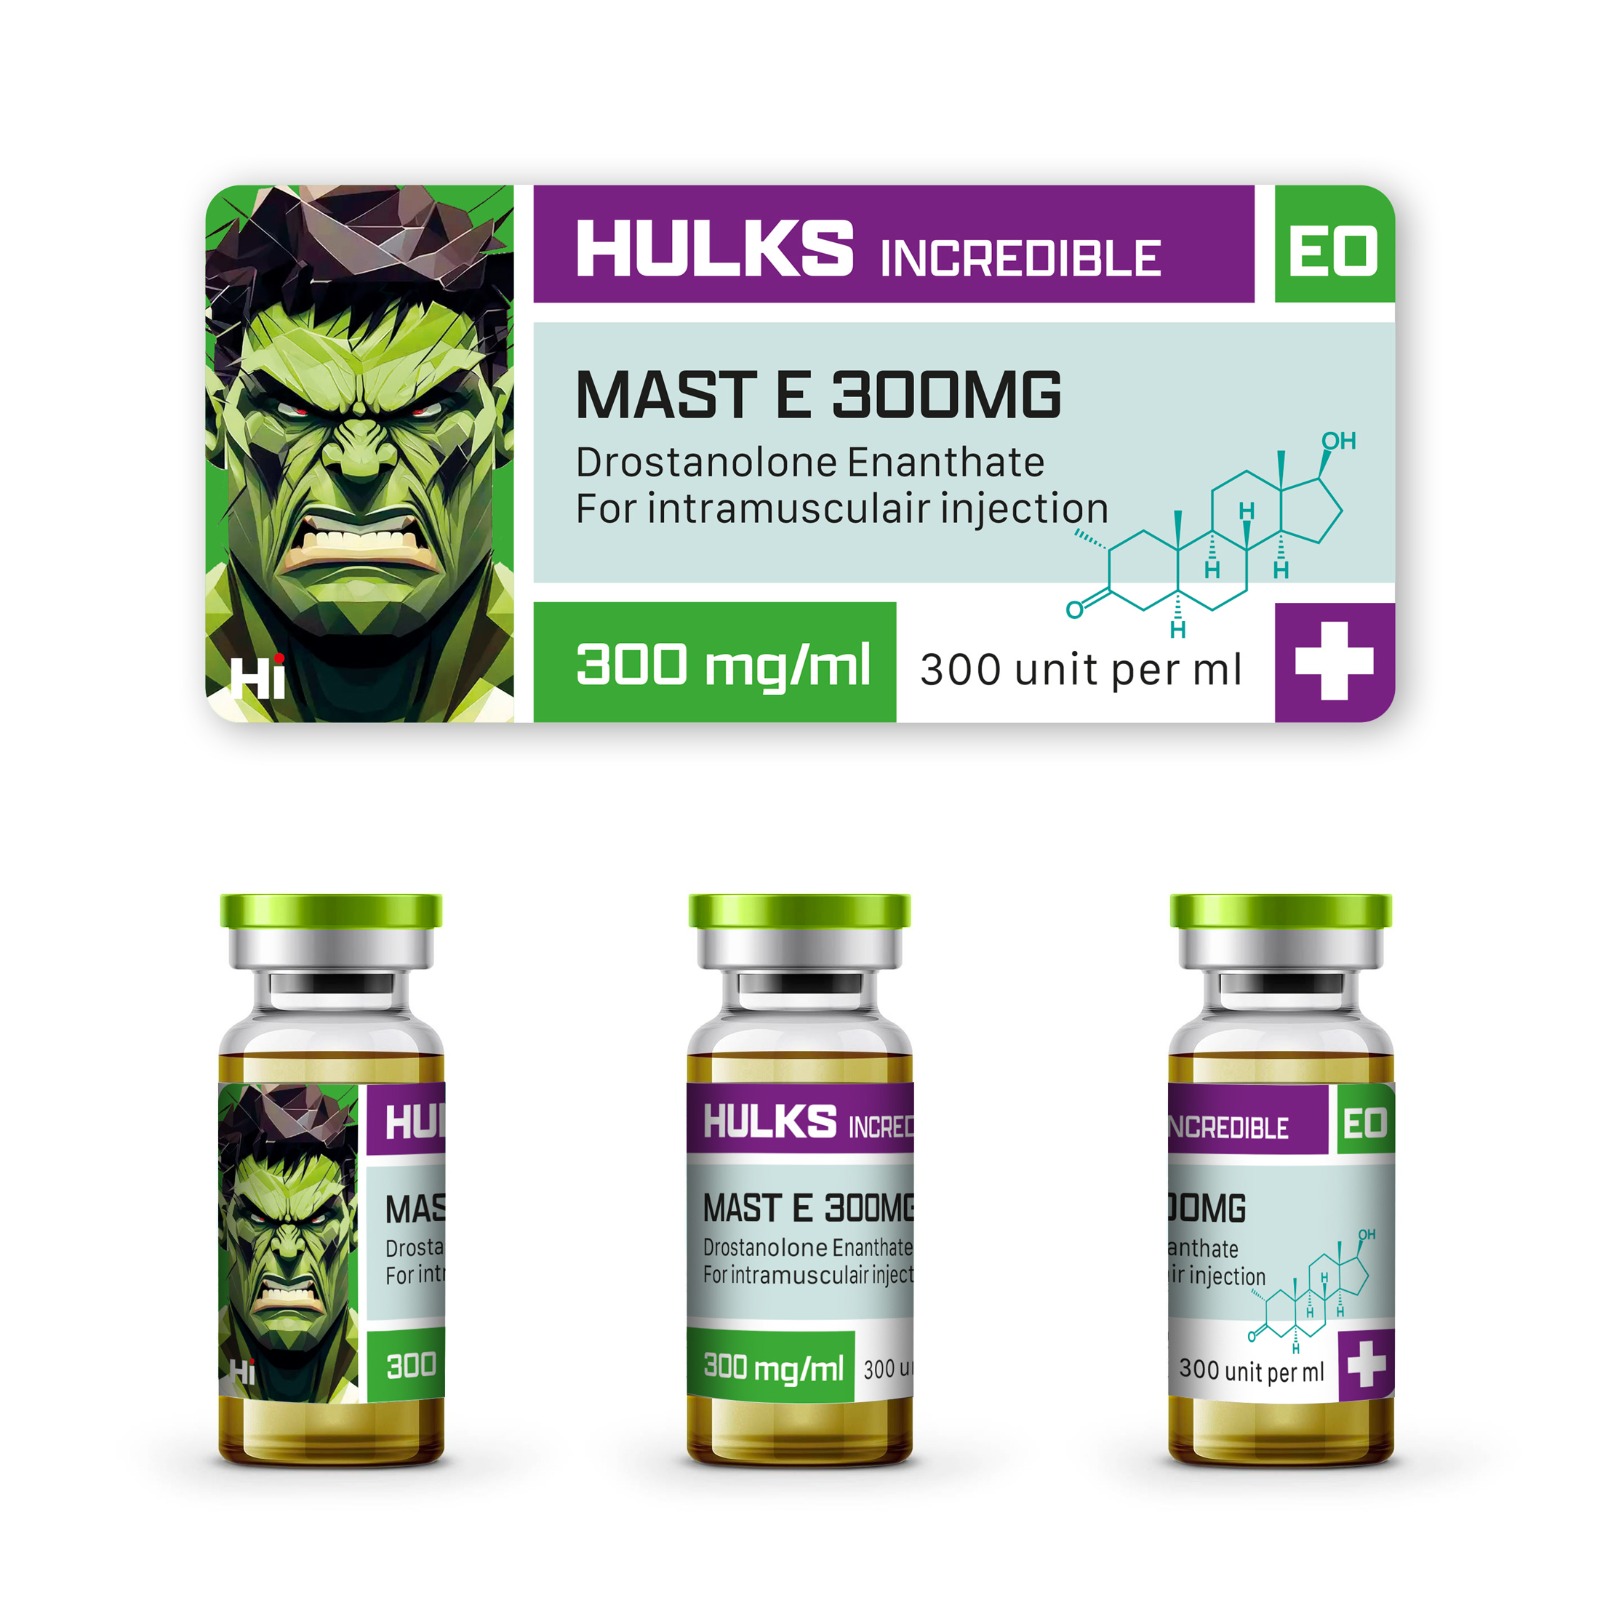 Hulks Incredible Drostanolone Enanthate 300mg (Mast E)